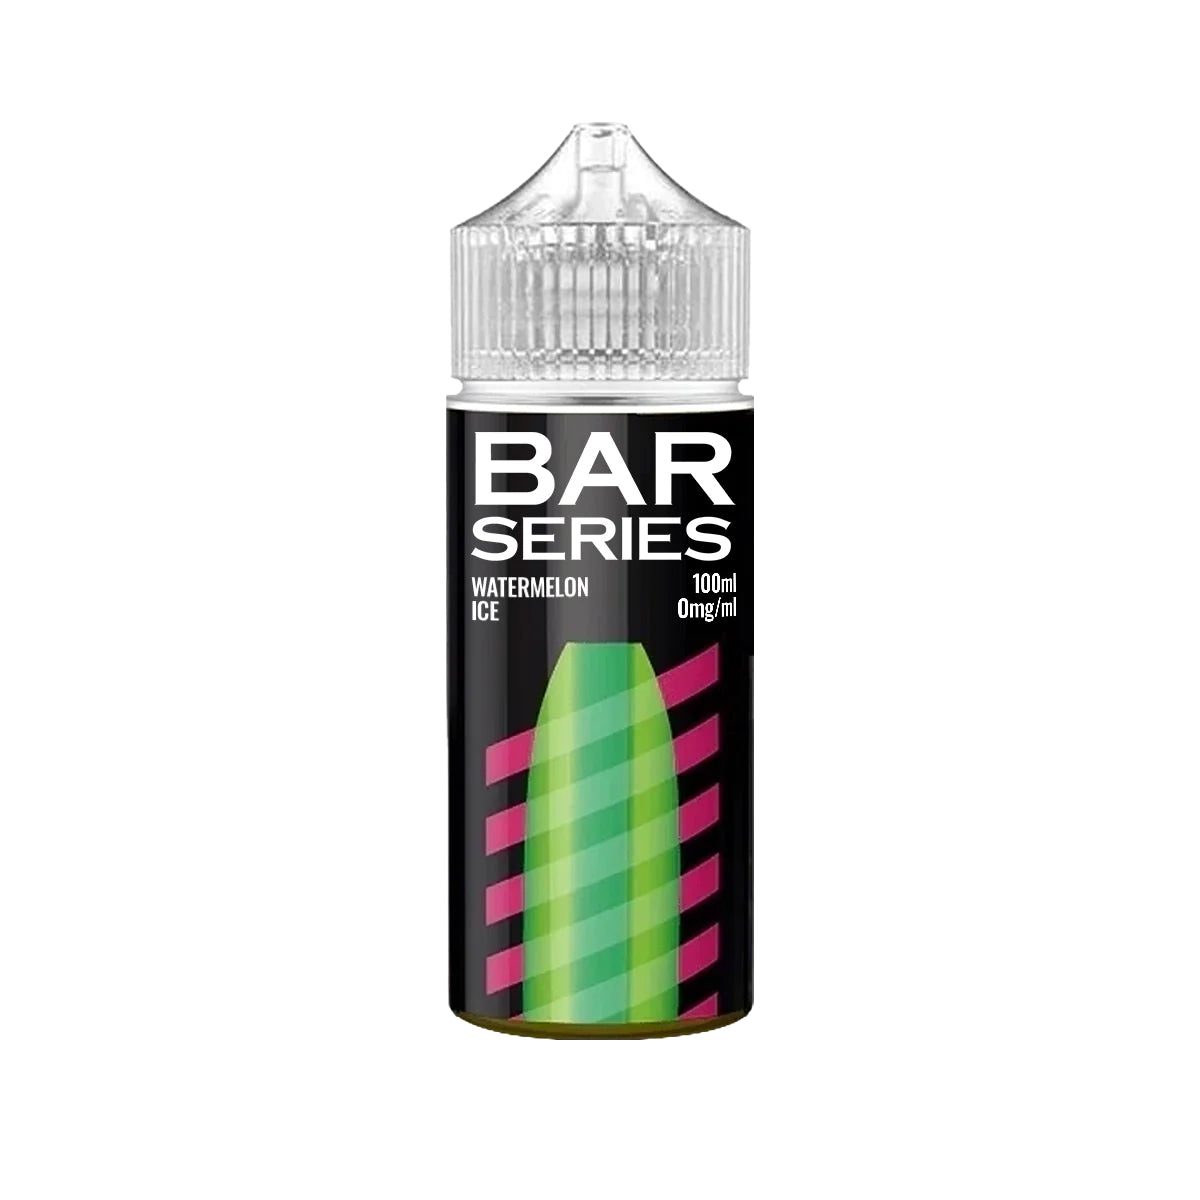 Bar Series Shortfill - Watermelon Ice - 100ml - Bar Series - E-Liquid - Rolling Refills